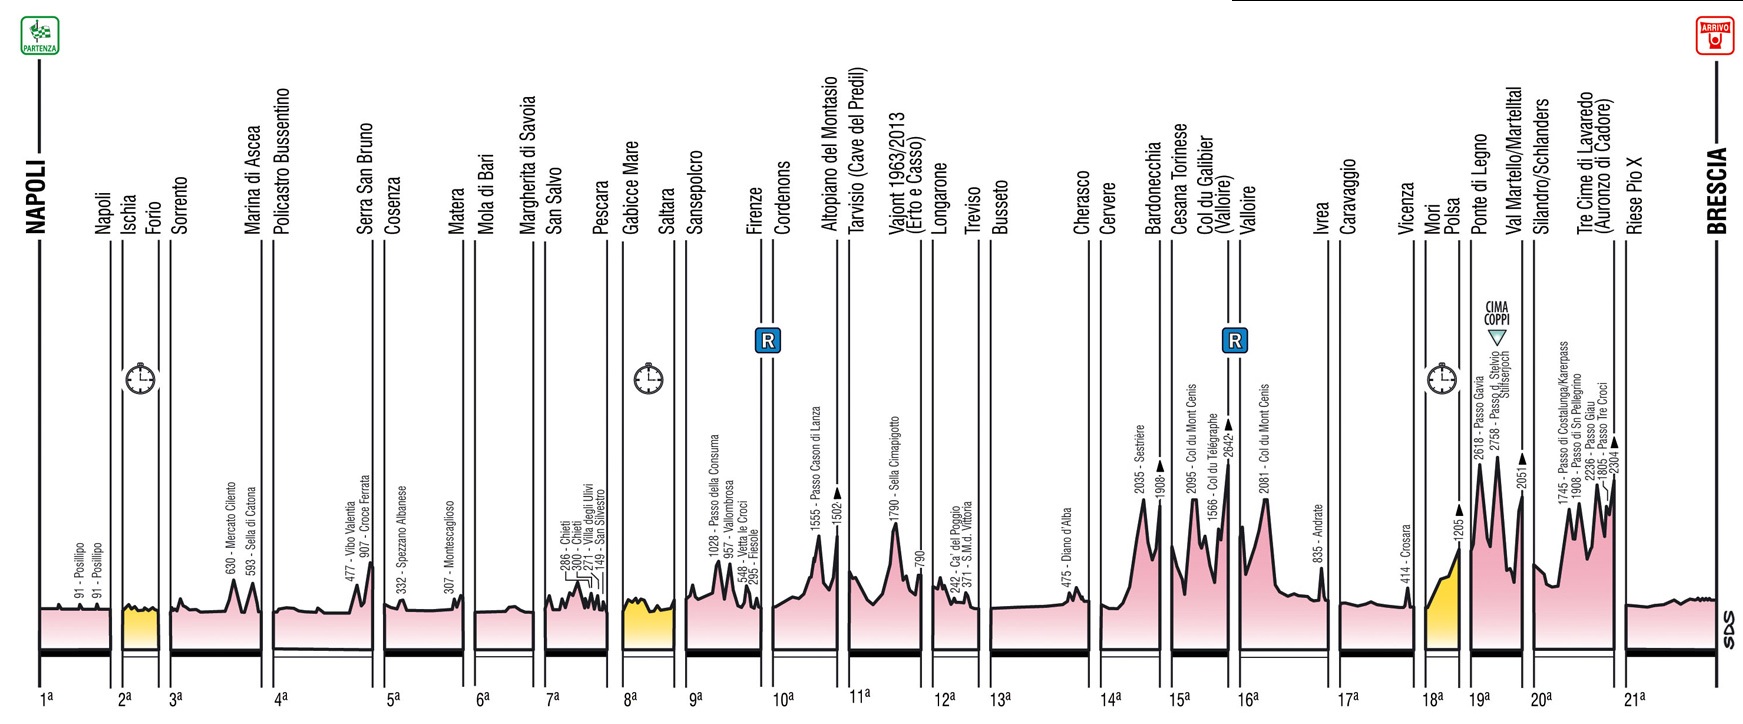 bersicht aller Profile des Giro dItalia 2013